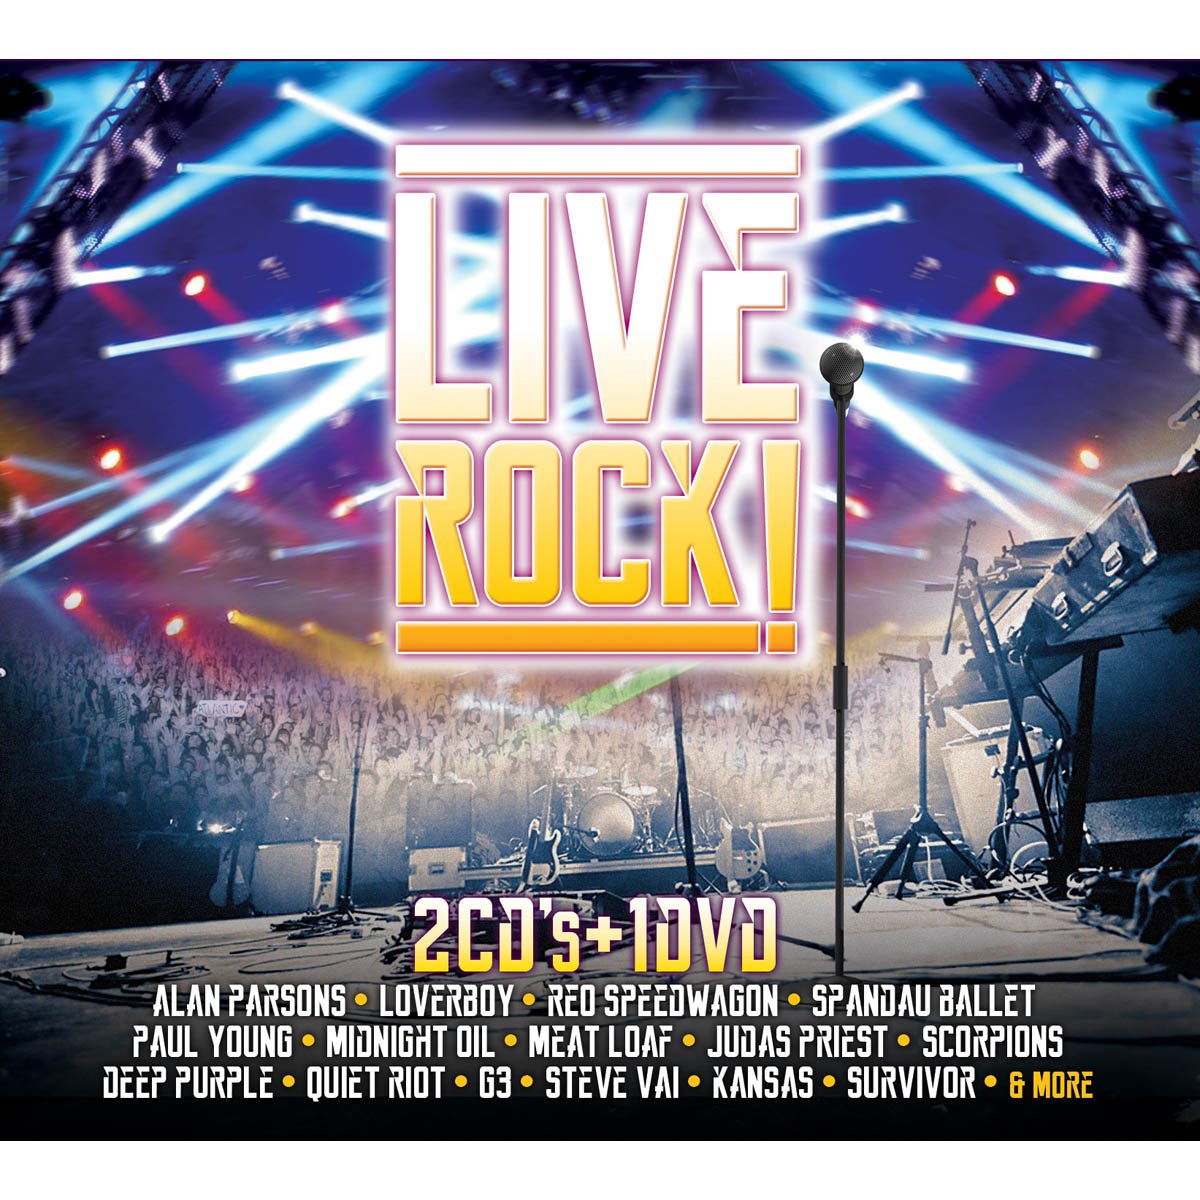 2Cds+Dvd Varios Live Rock !